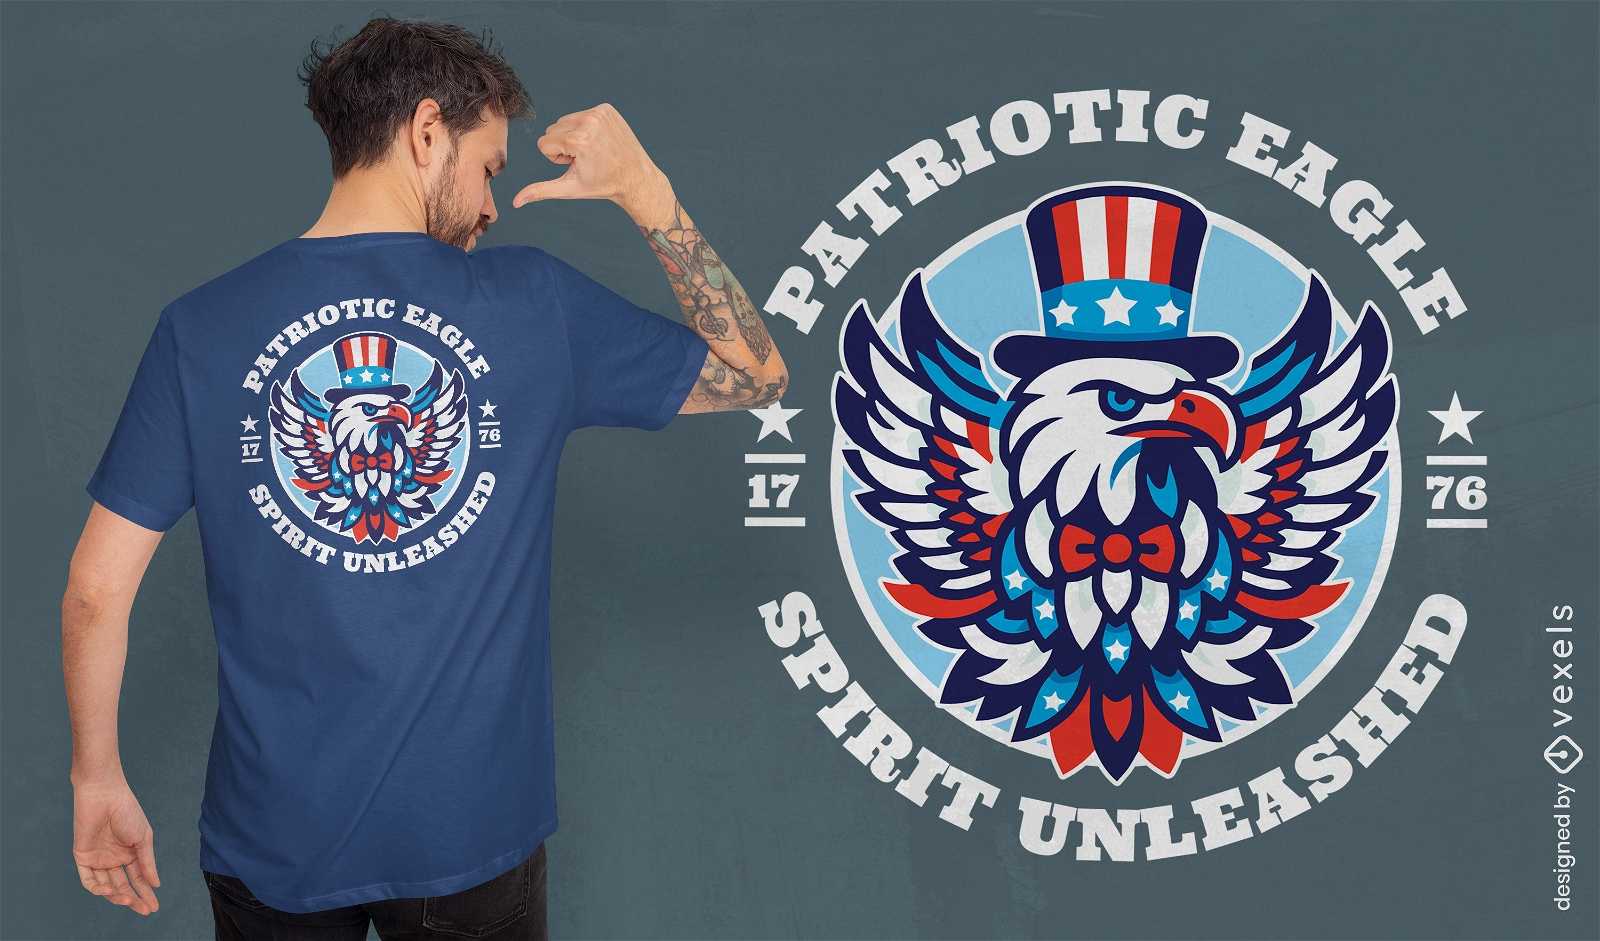 Patriotic American eagle t-shirt design